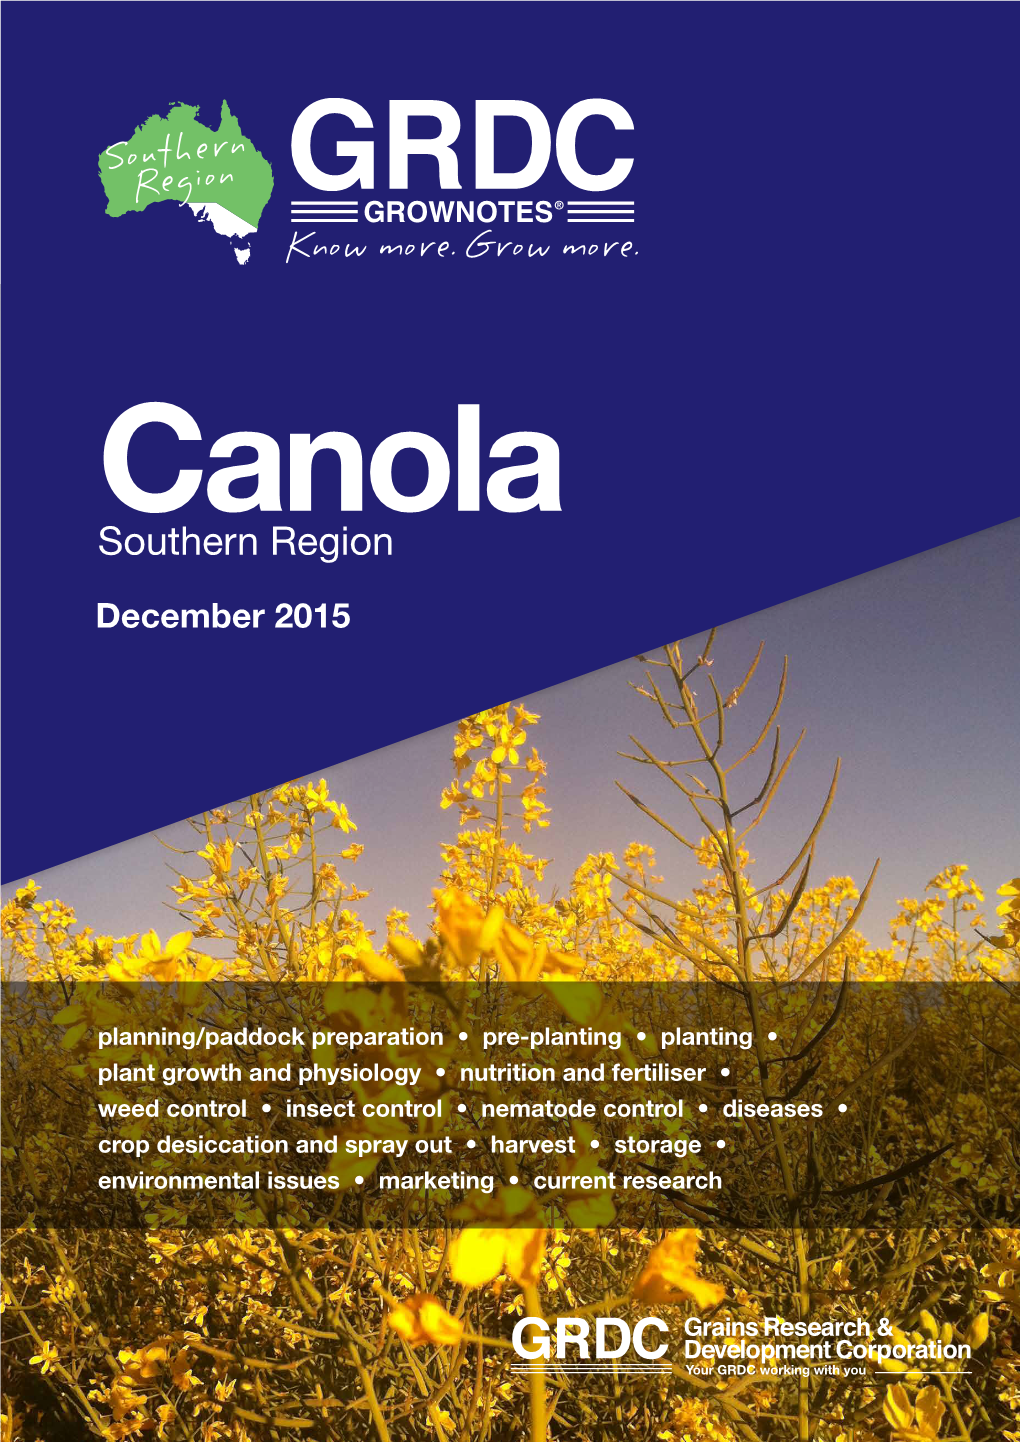 GRDC Grownotes Canola Southern Region